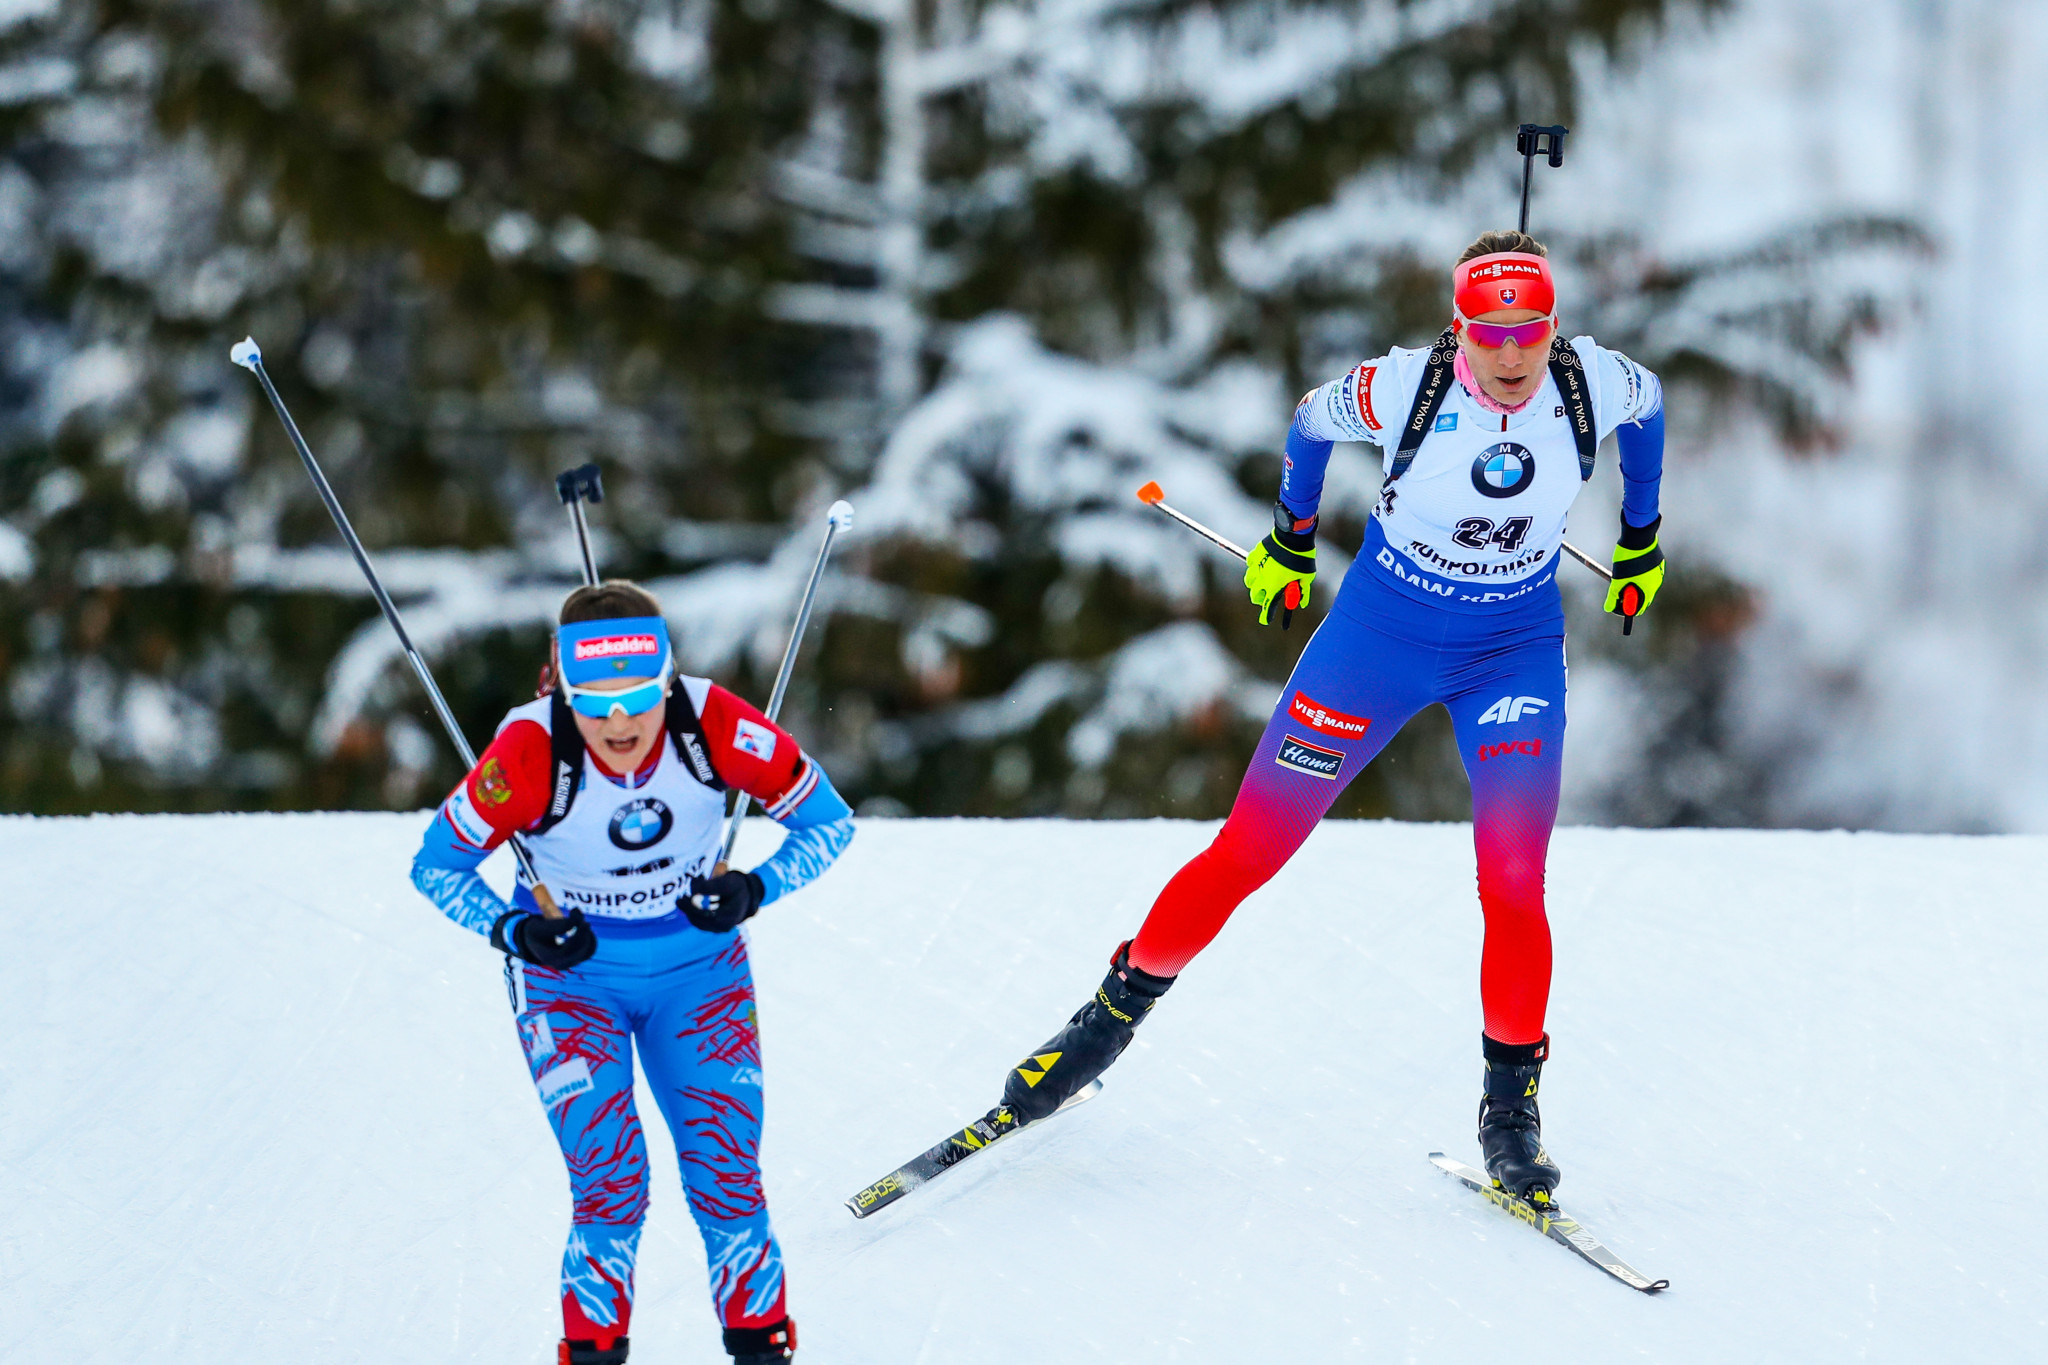 Slovakia's Anastasiya Kuzmina won the women's event with a dominant performance ©Getty Images